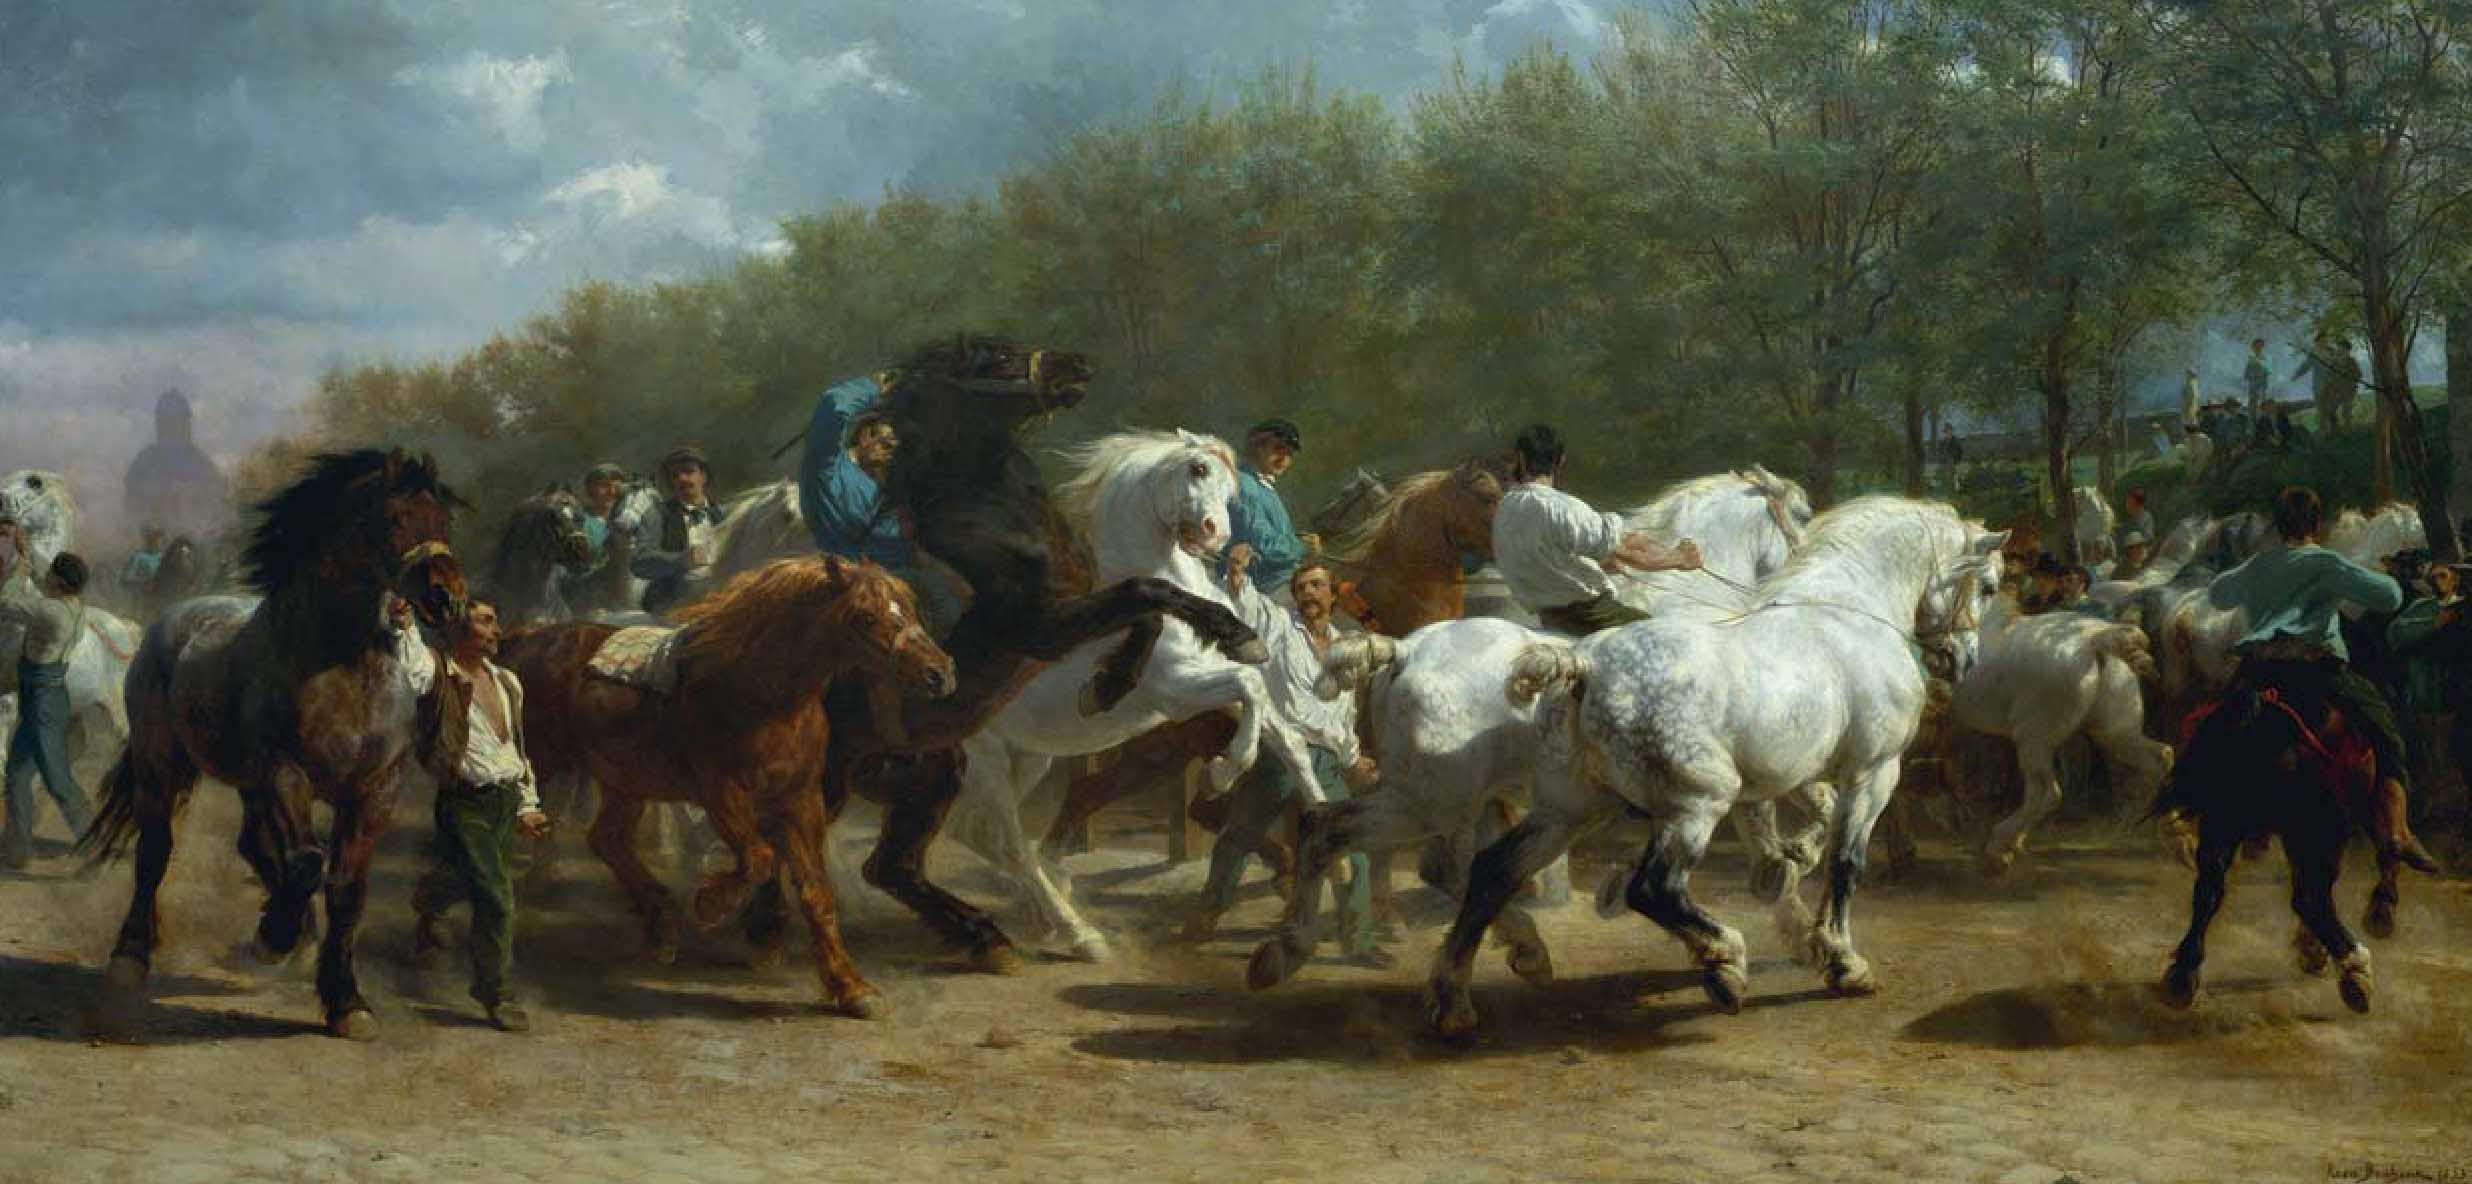 Ярмарка лошадей. Р. Бонхер. 1852 год. Музей Метрополитен, Нью-Йорк (США).